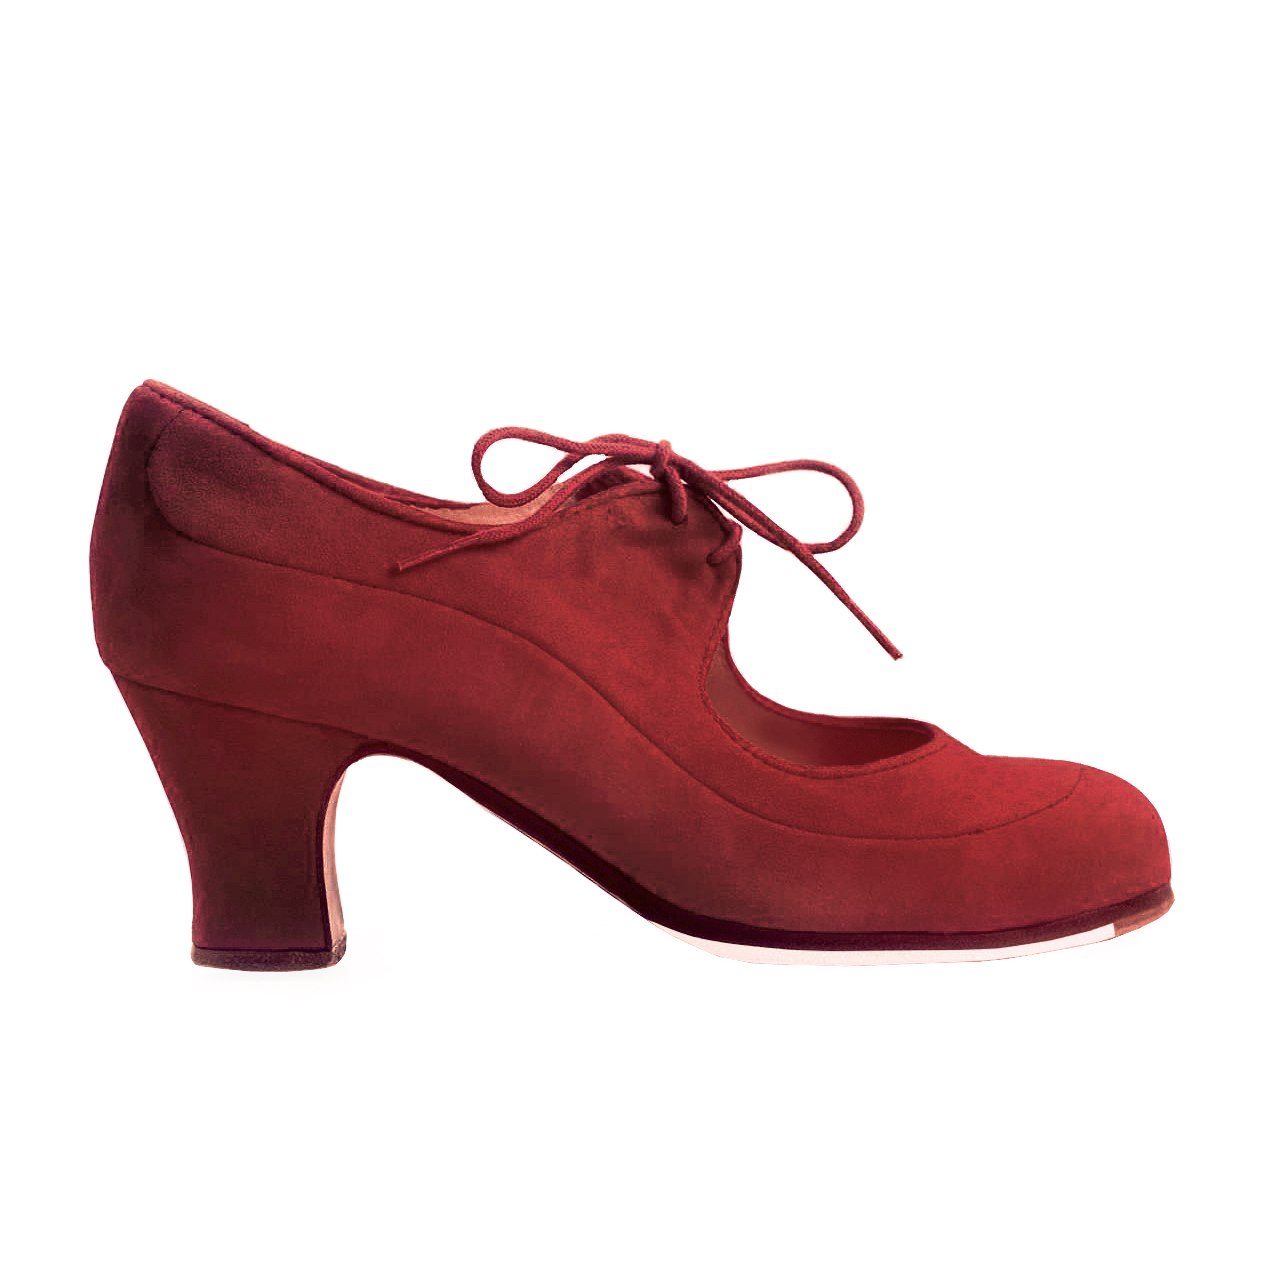 Chaussures Flamenco daim marron suède